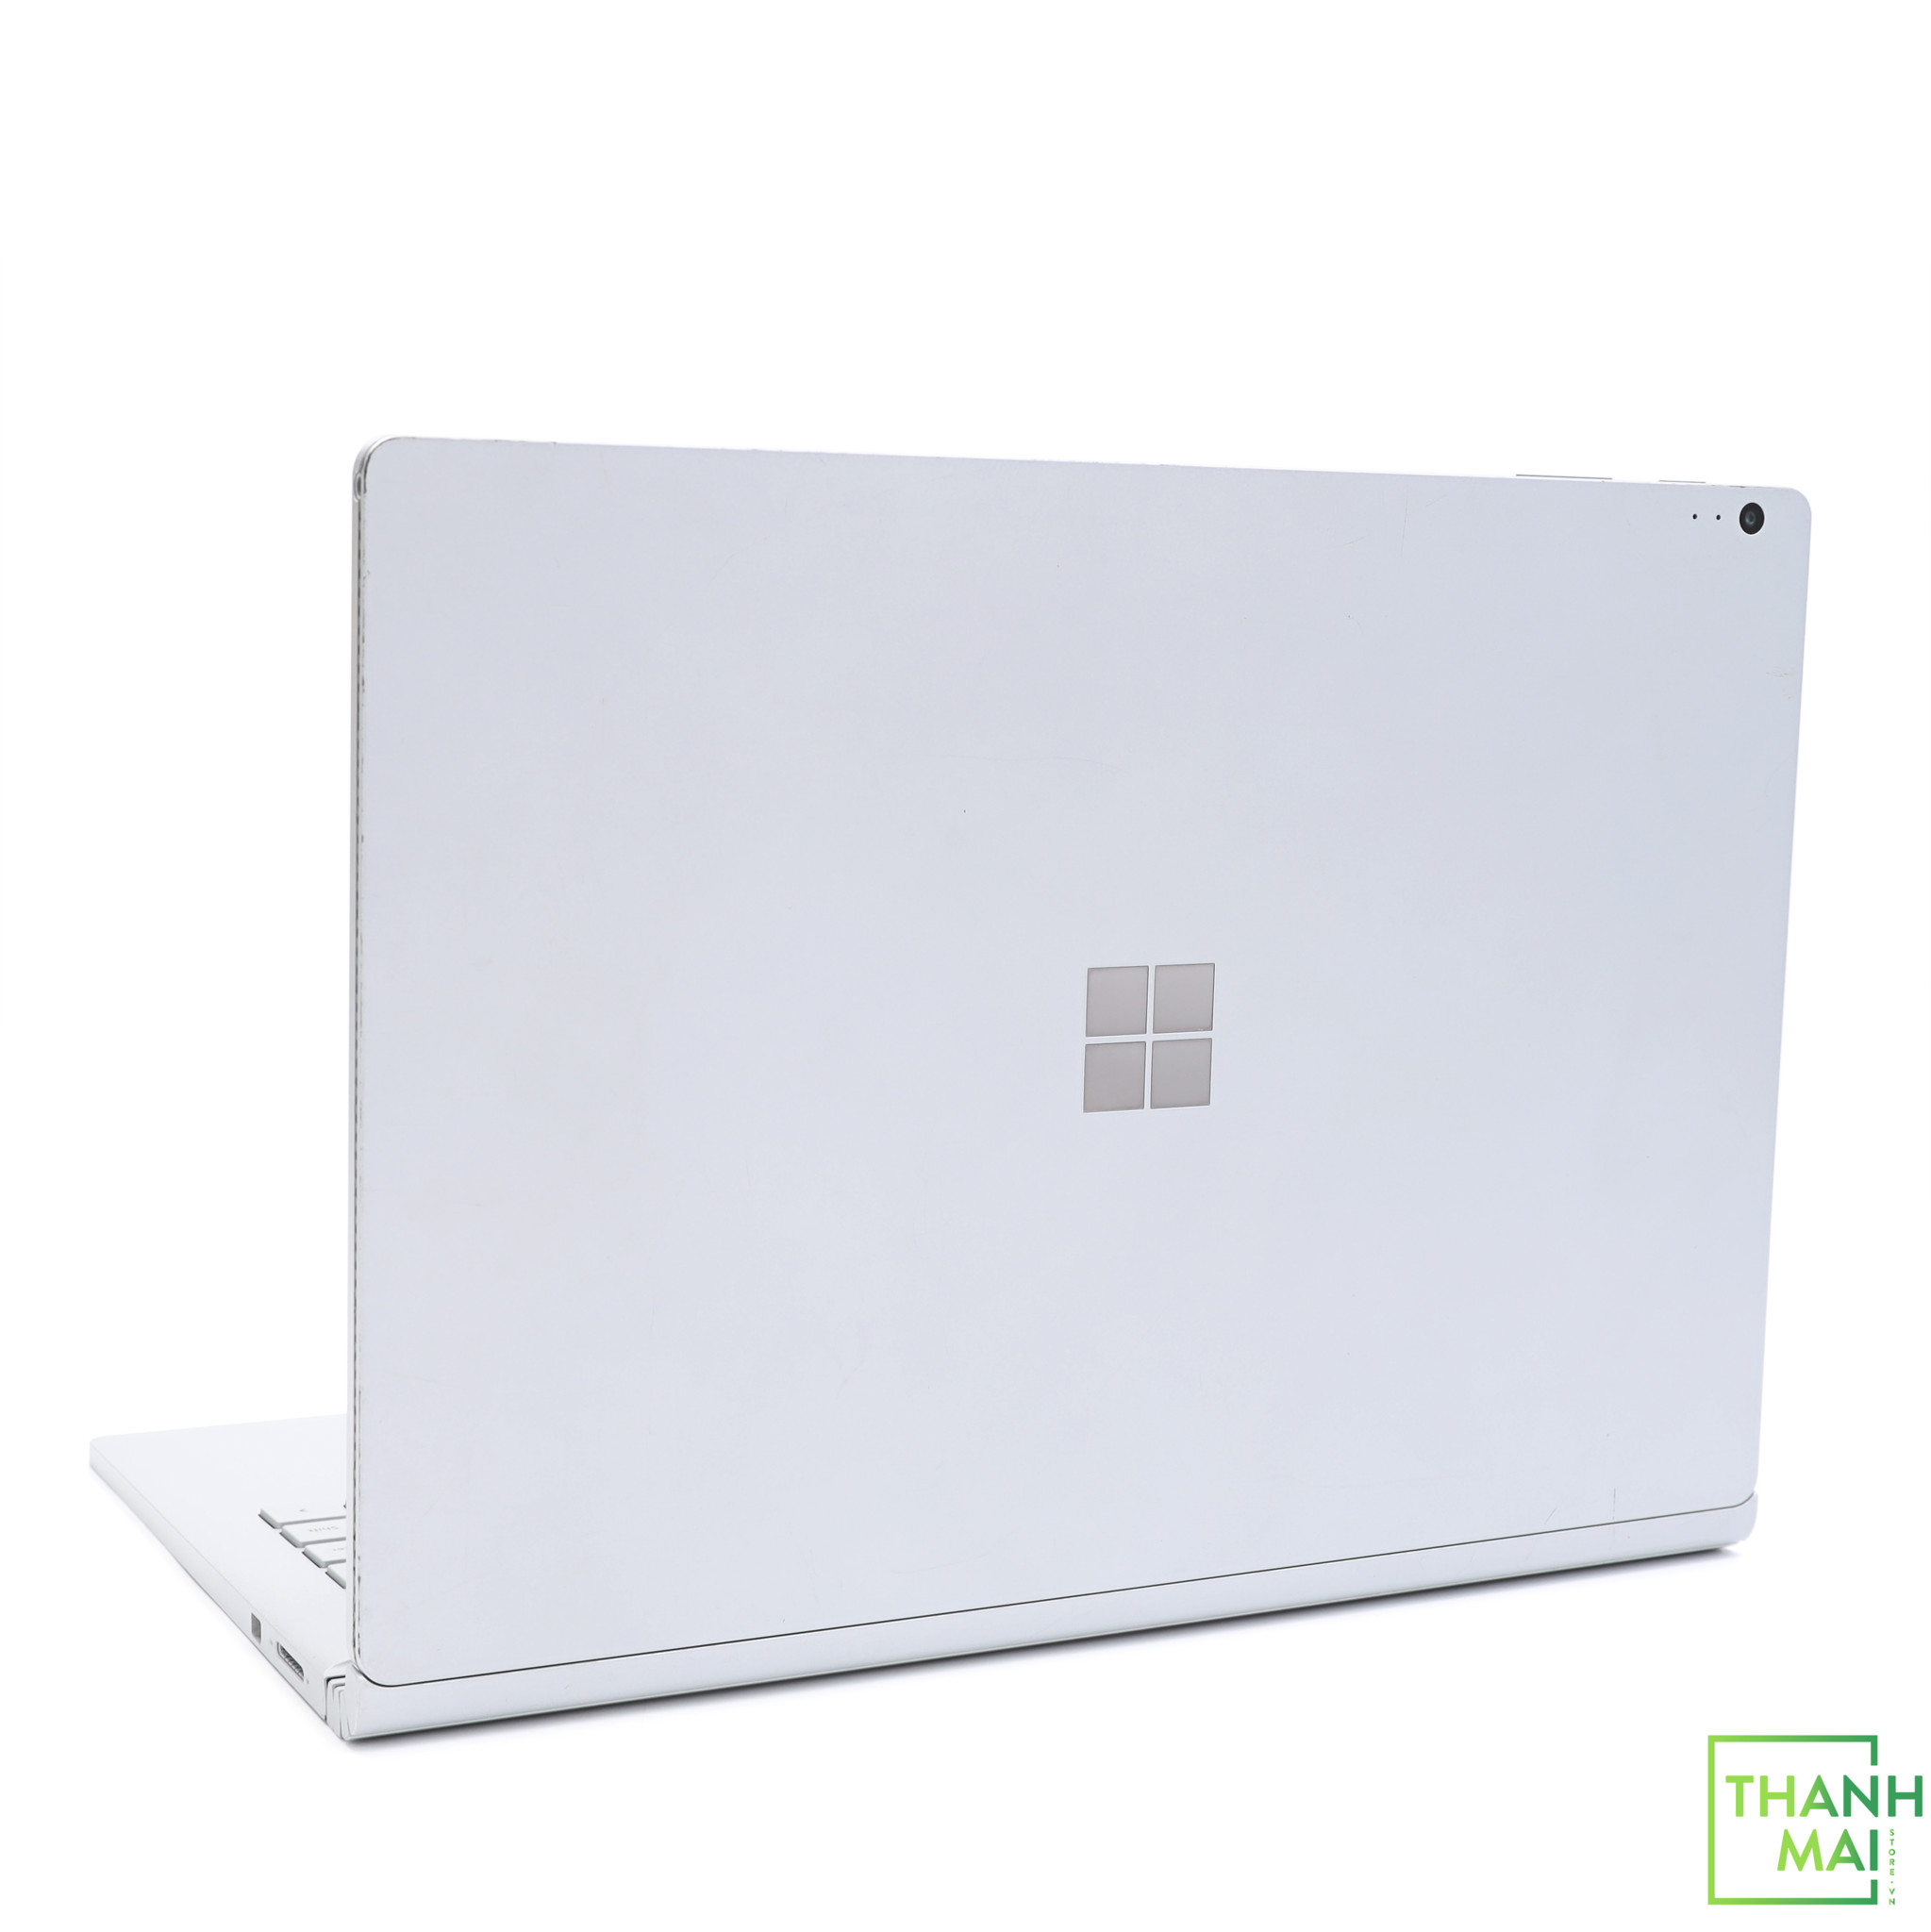 Microsoft Surface Book 3 | Intel Core I7-1065G7 | Ram 32GB | SSD 512GB | NVIDIA GeForce GTX 1660 Ti With Max-Q Design 6GB | 15 Inch Touch Screen